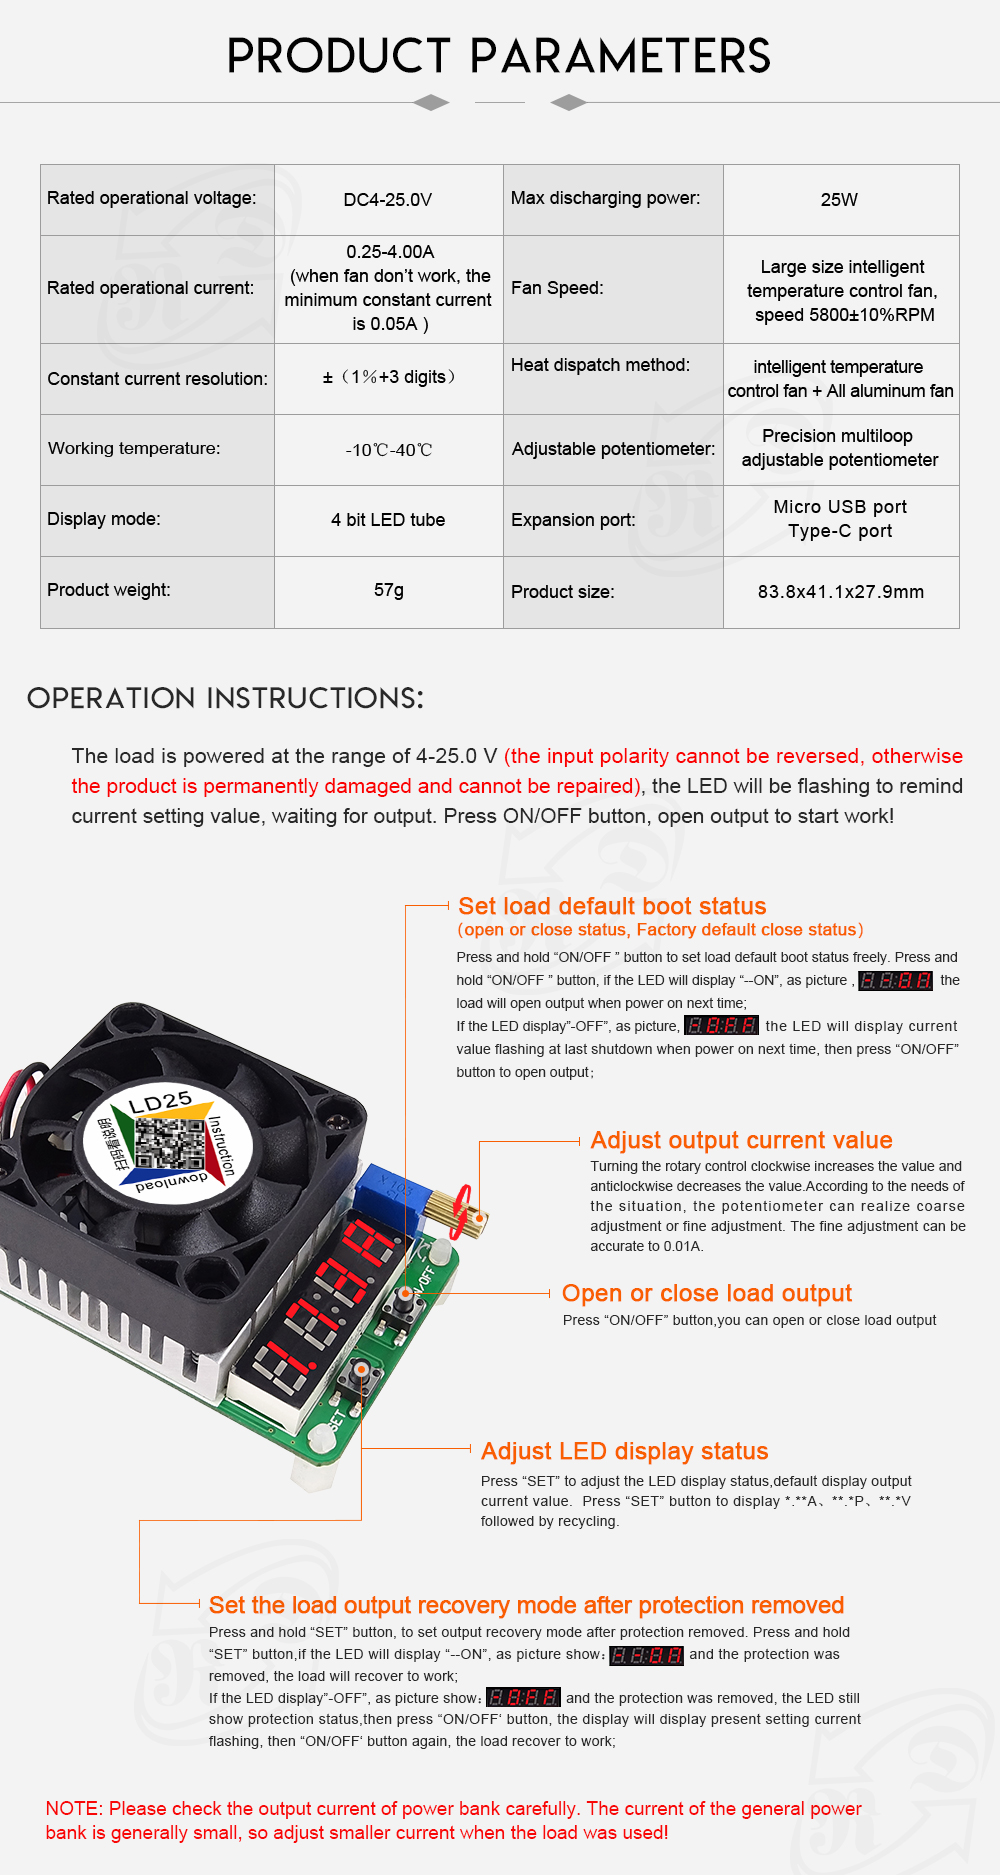 RIDENreg-LD25-Electronic-Load-Resistor-USB-Interface-Discharge-Battery-Test-LED-Display-Fan-Adjustab-1305445